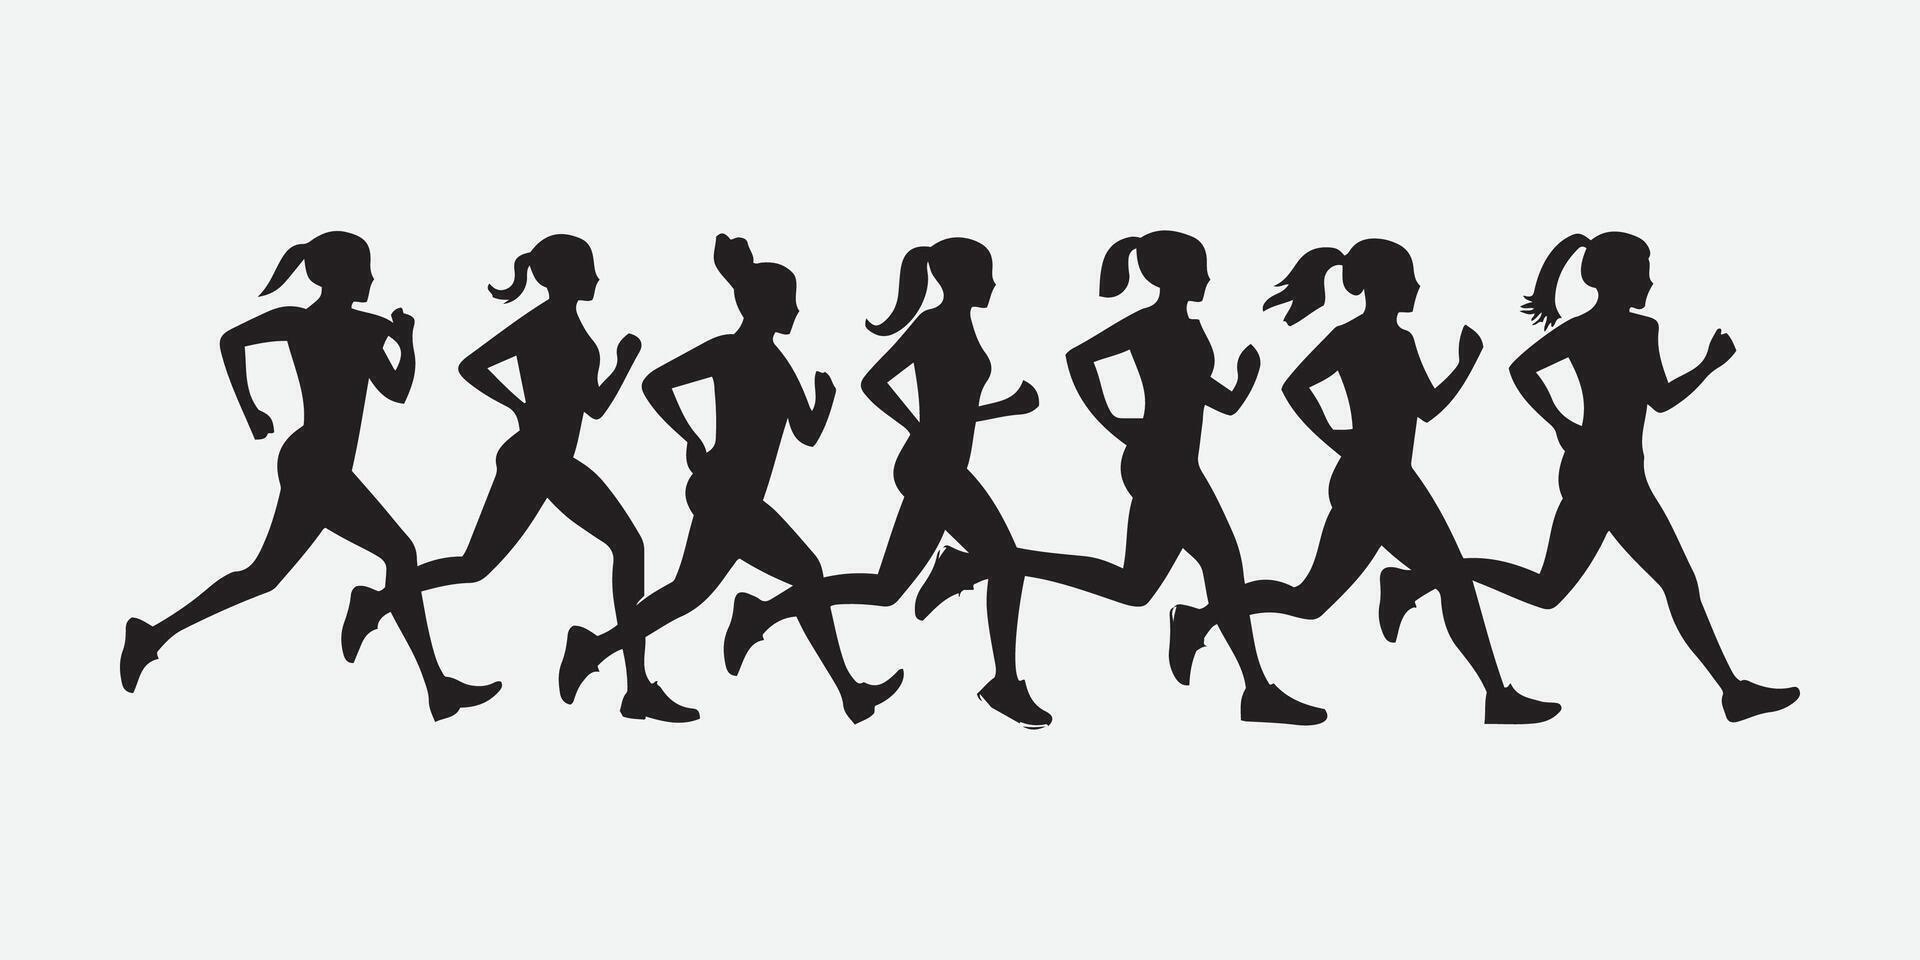 ung idrottare springa en maraton. isolerat silhuetter på vit bakgrund vektor